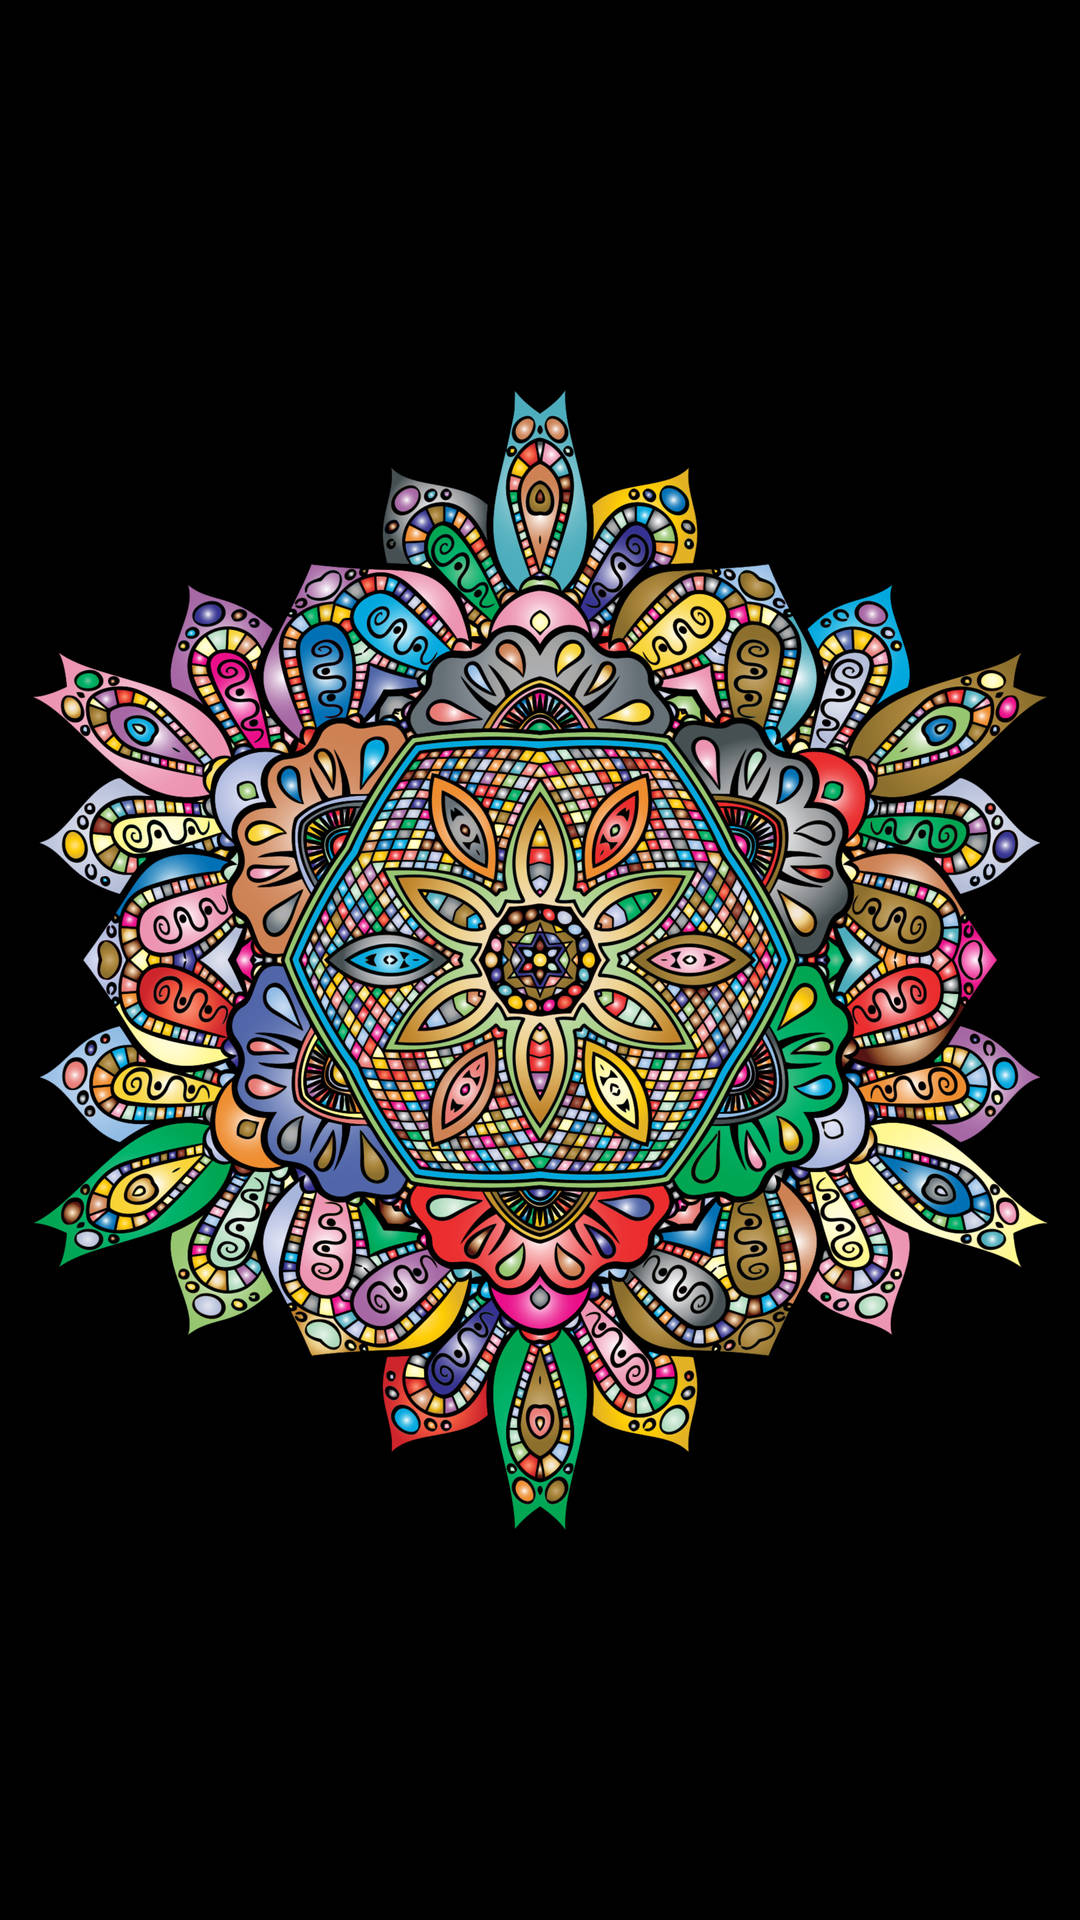 Floral Mandala